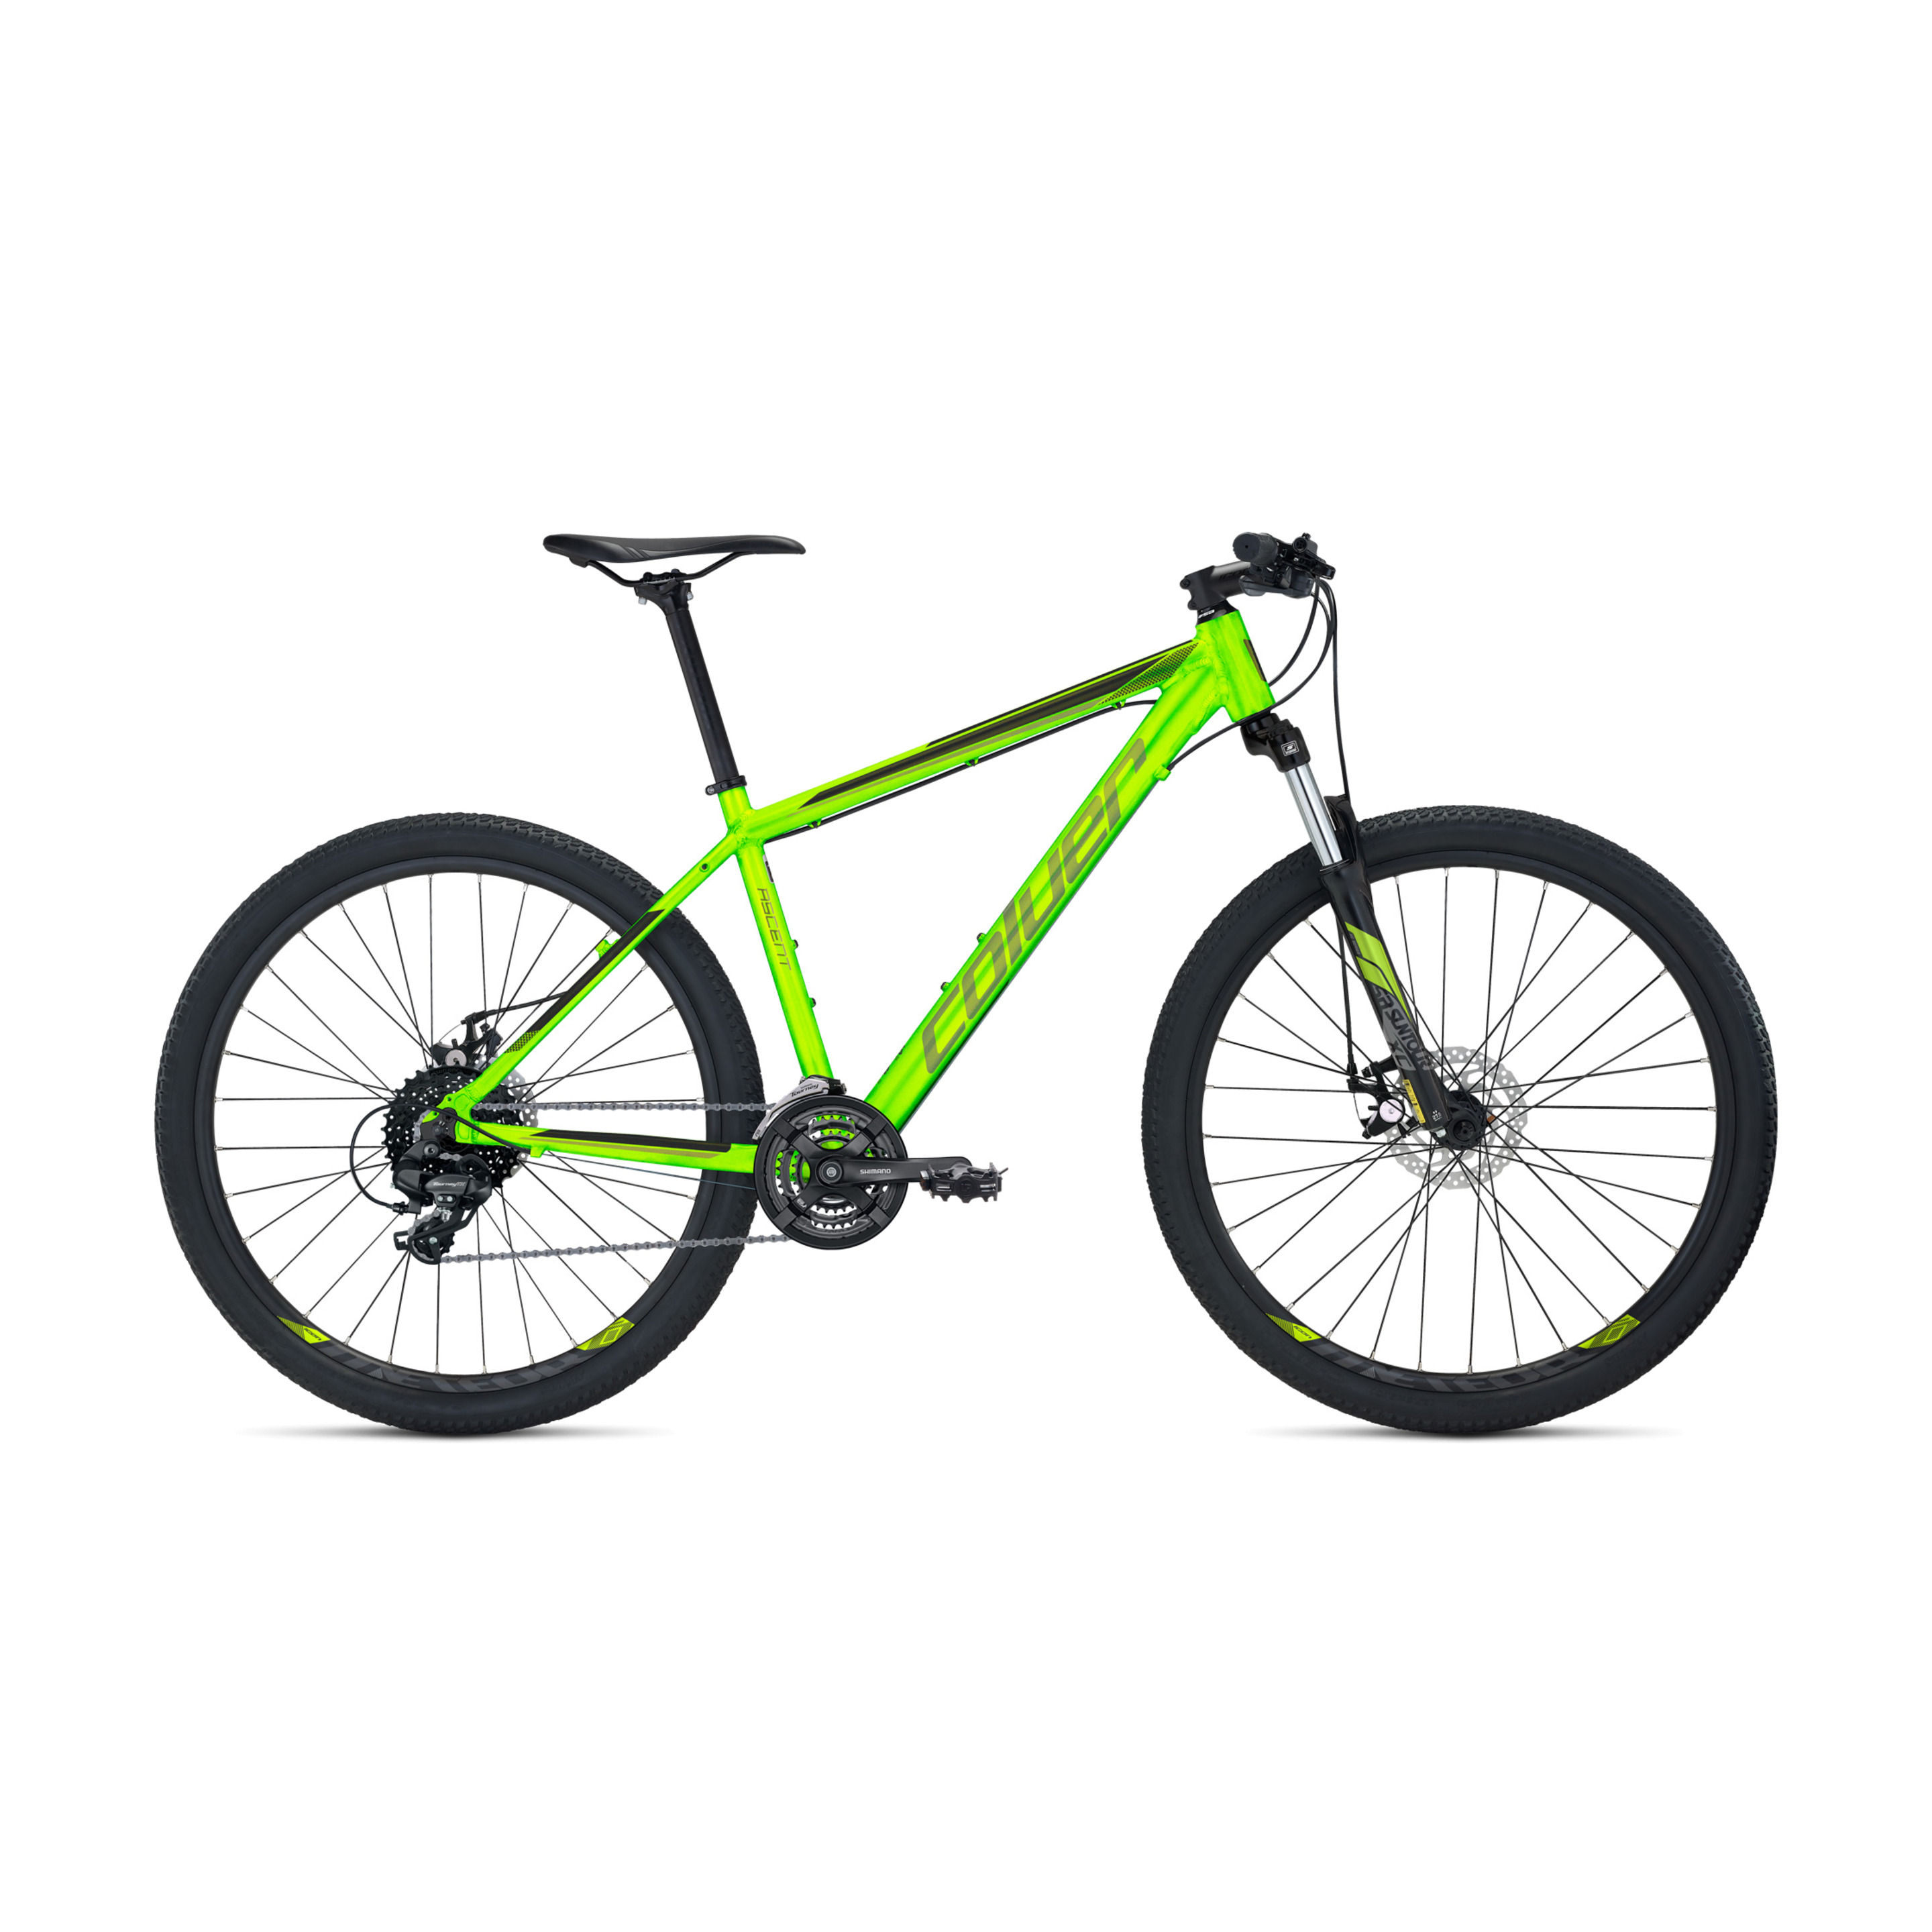 Bicicleta Mtb Coluer Ascent 292 - verde - 